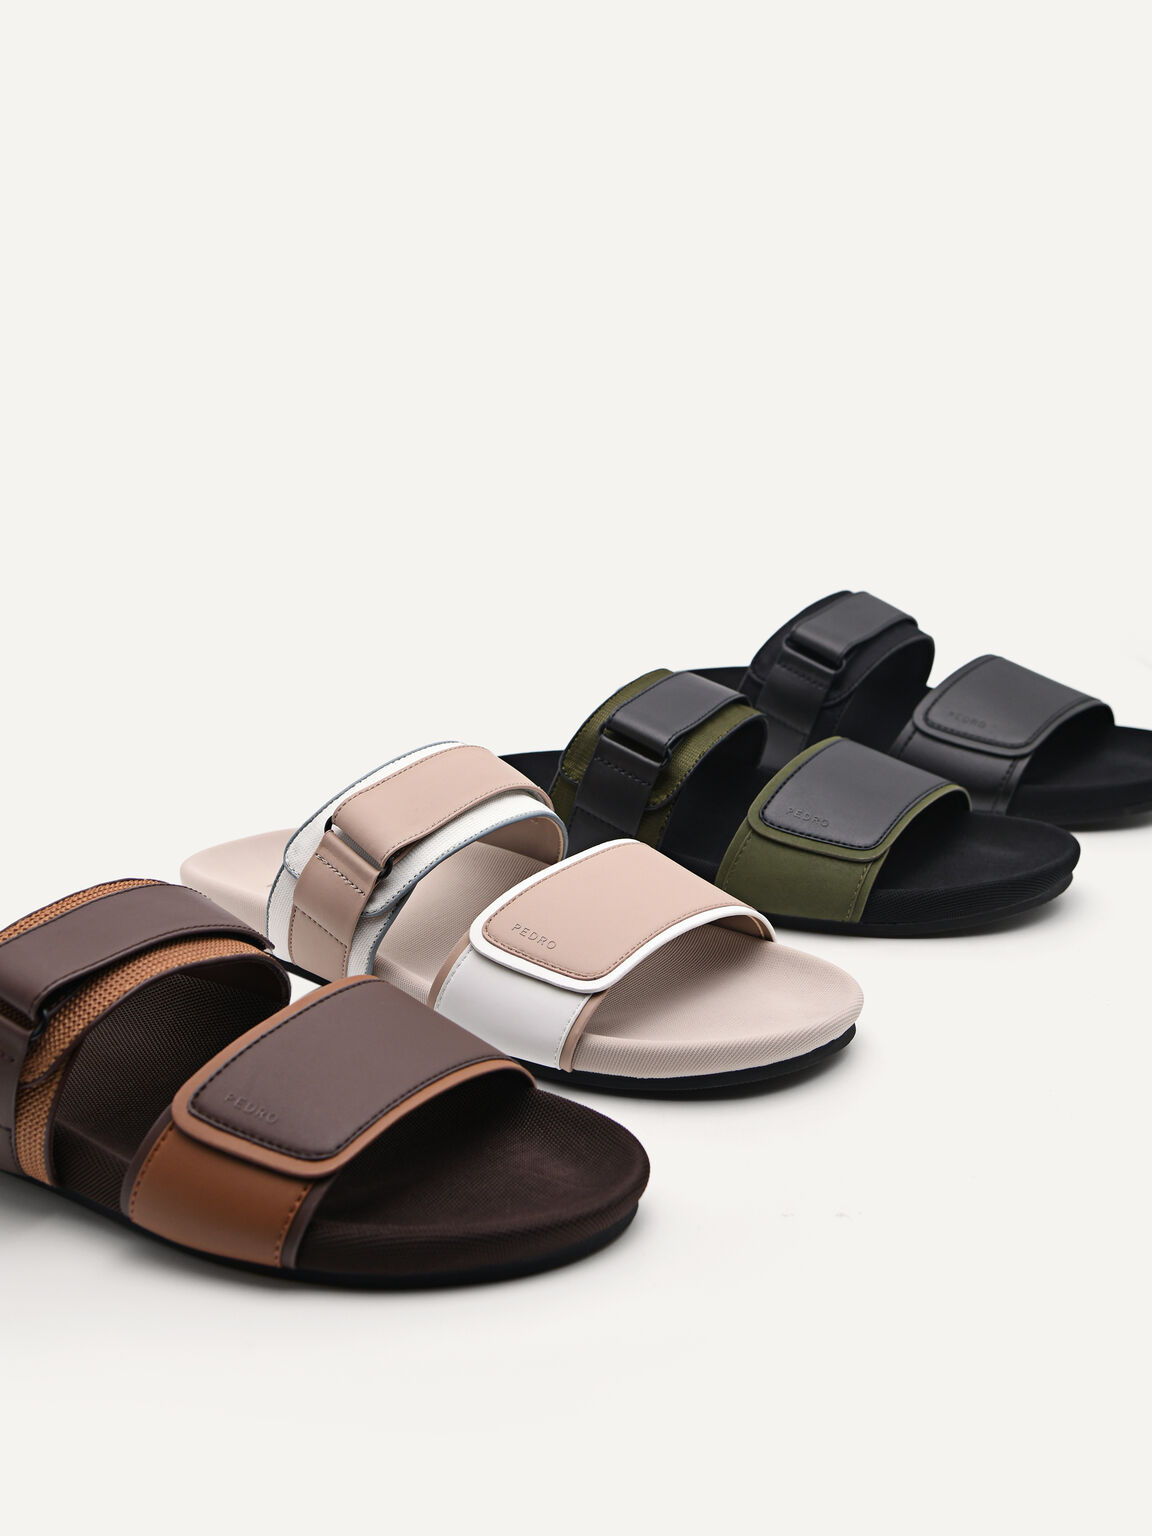 Double Strap Slide Sandals, Dark Brown, hi-res